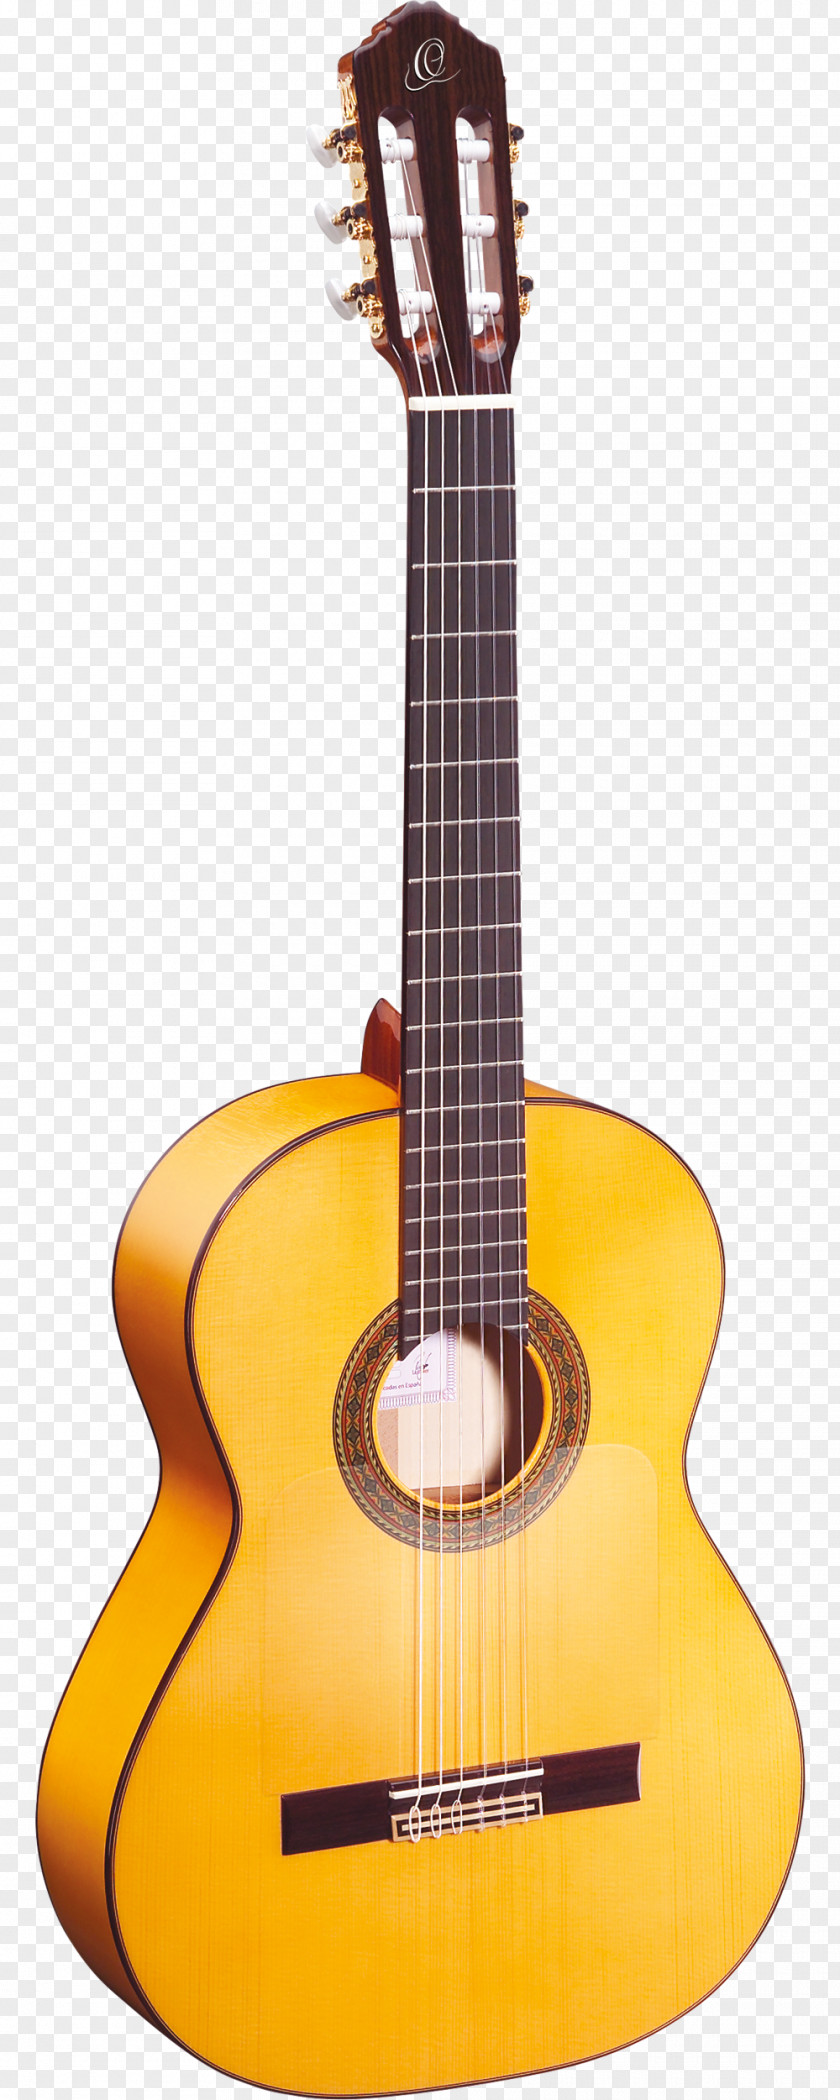 Amancio Ortega Classical Guitar Flamenco Musical Instruments PNG